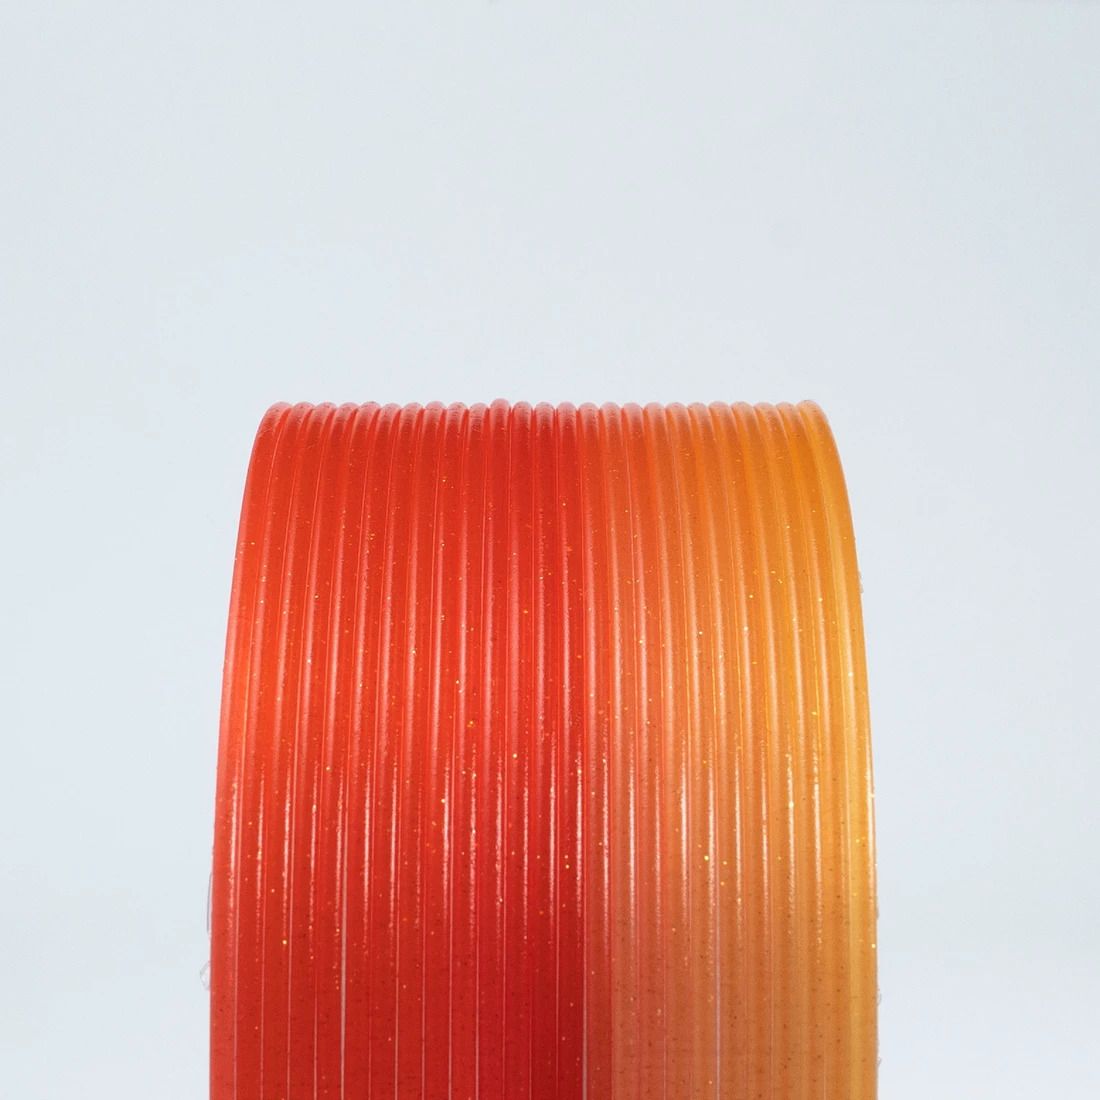 Citrus Sunrise Orange HTPLA  1.75mm 500gms 3D printing filament Proto-pasta